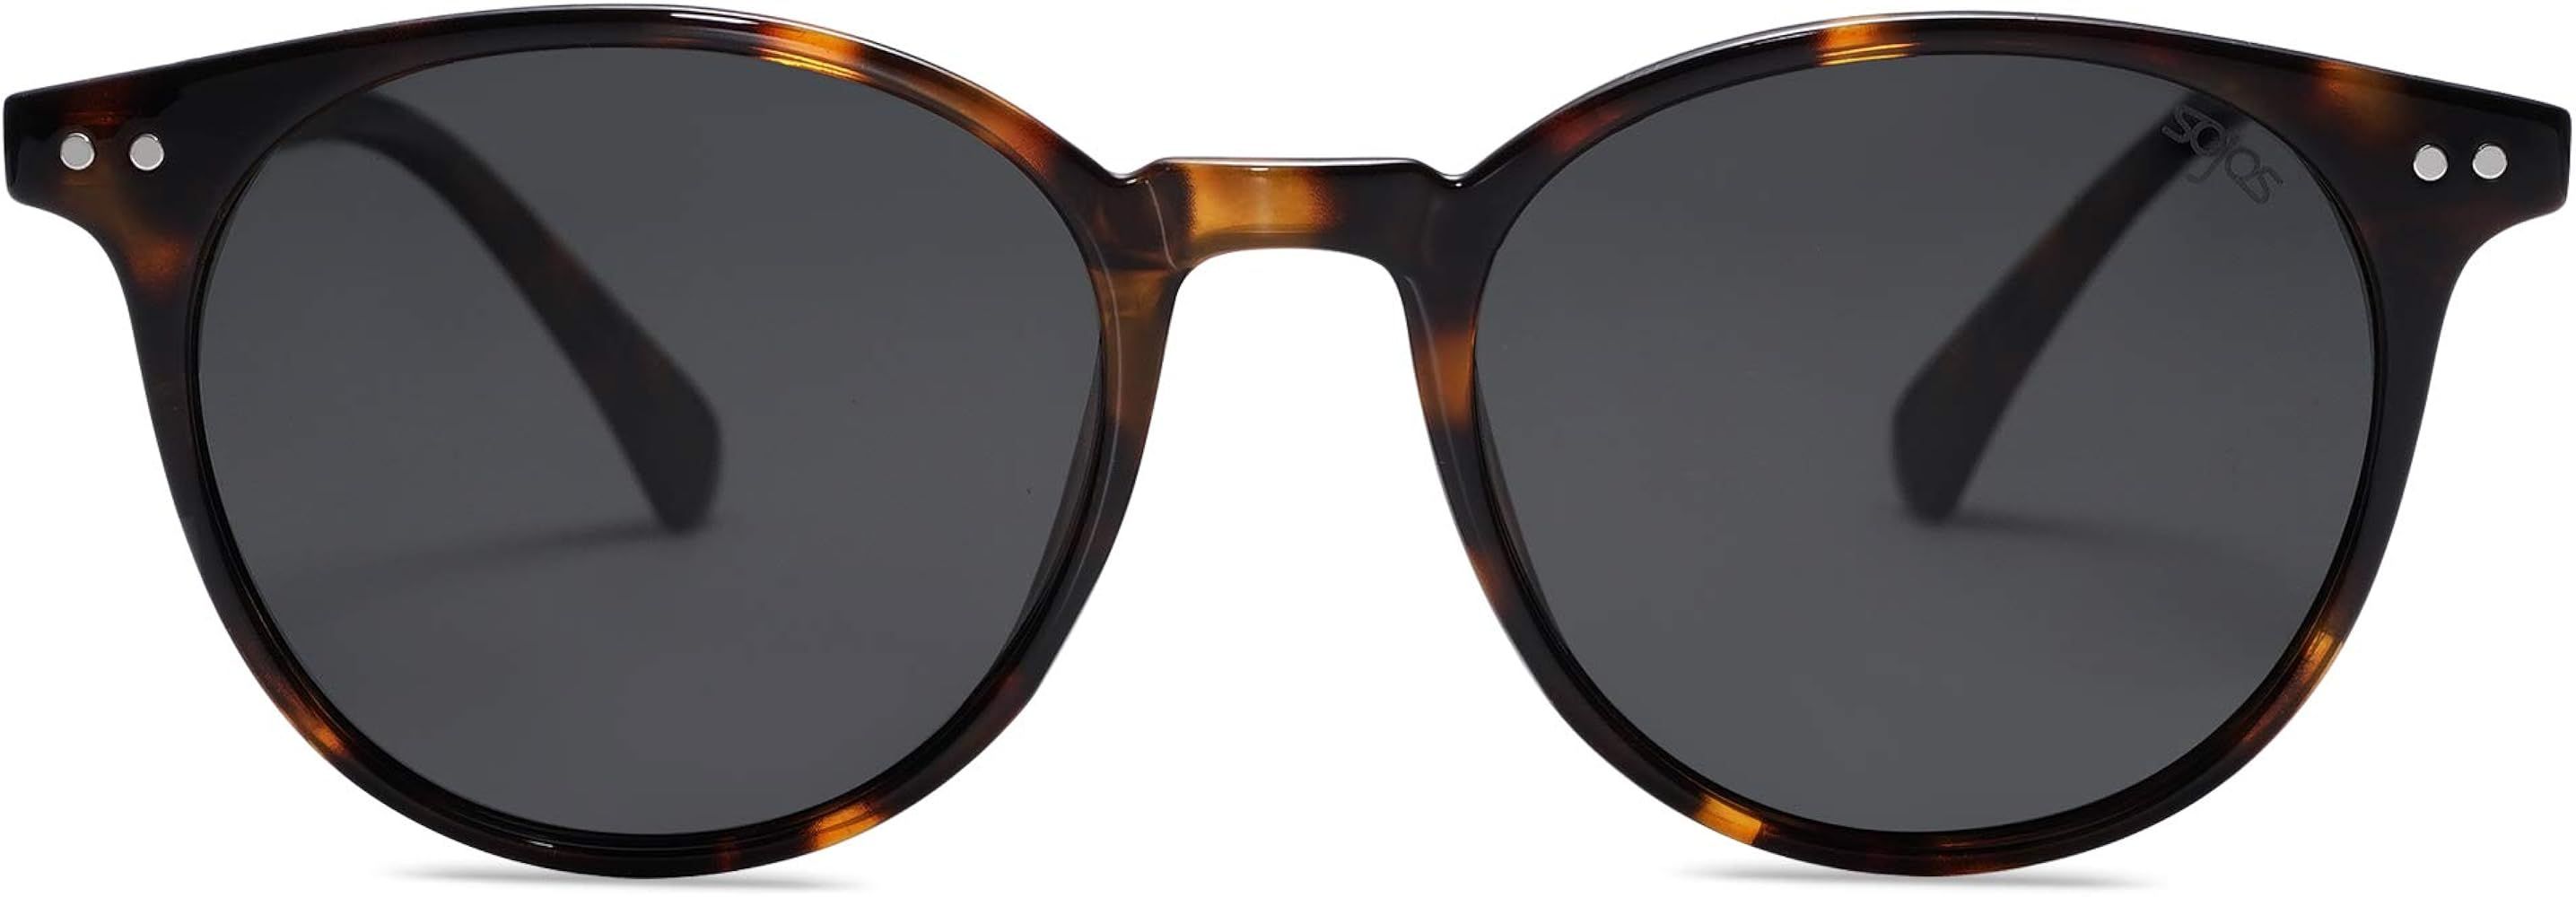 SOJOS Small Round Classic Polarized Sunglasses for Women Men Vintage Style UV400 Lens SJ2113 | Amazon (US)